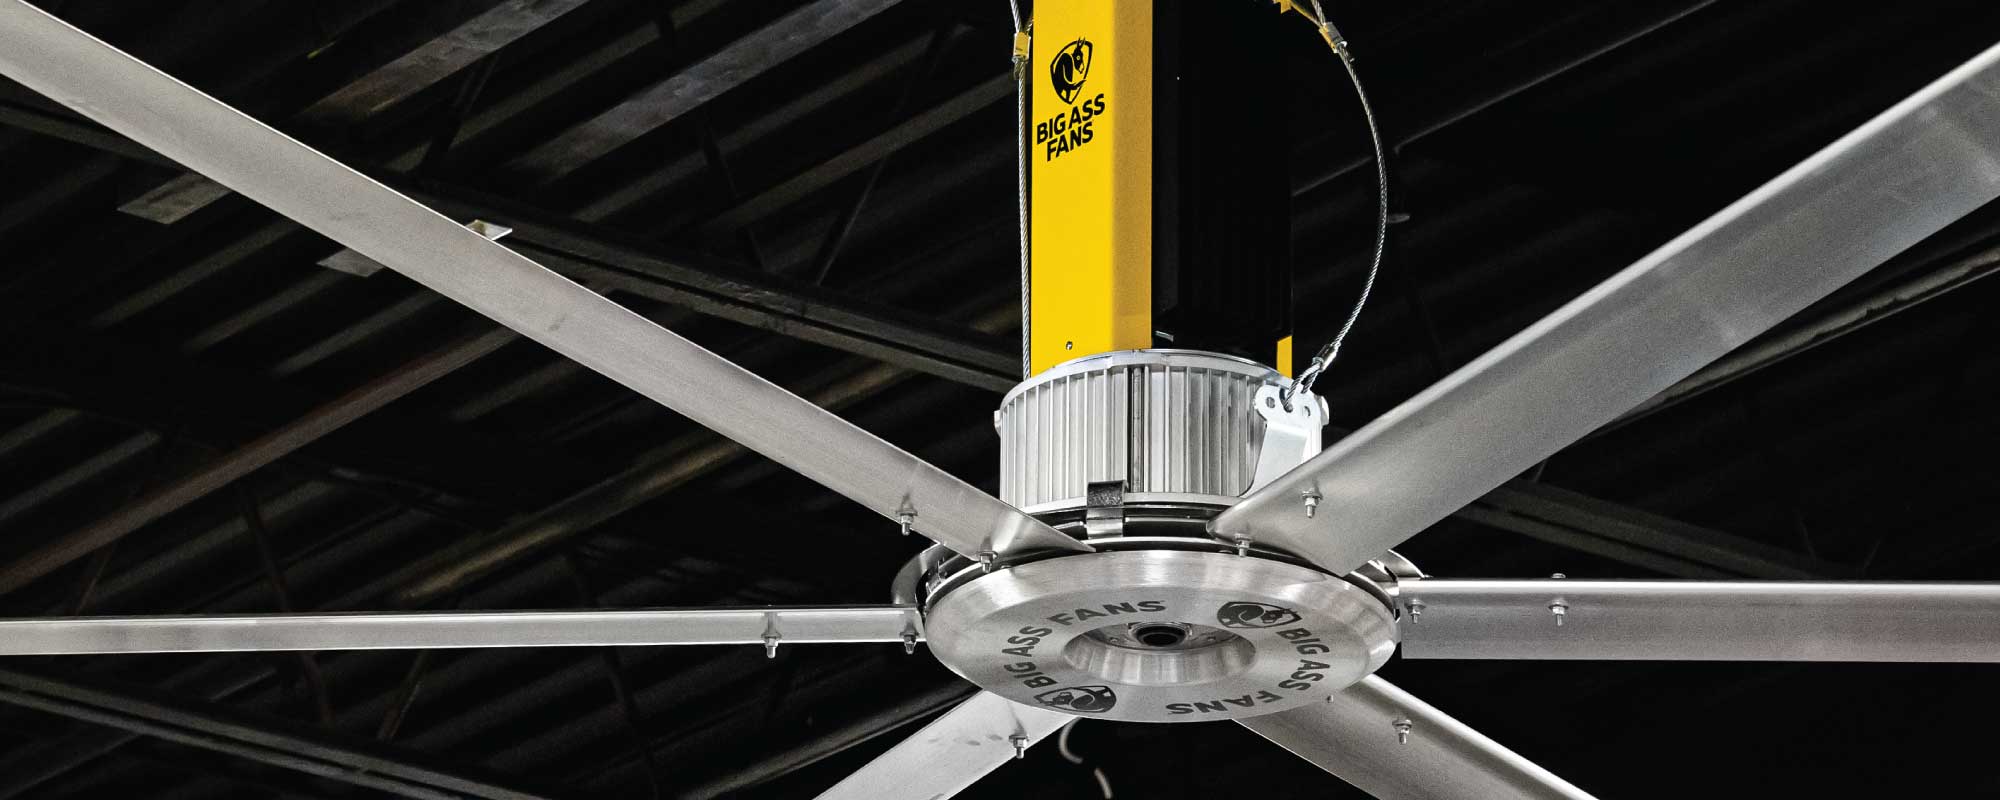 large warehouse ceiling fans